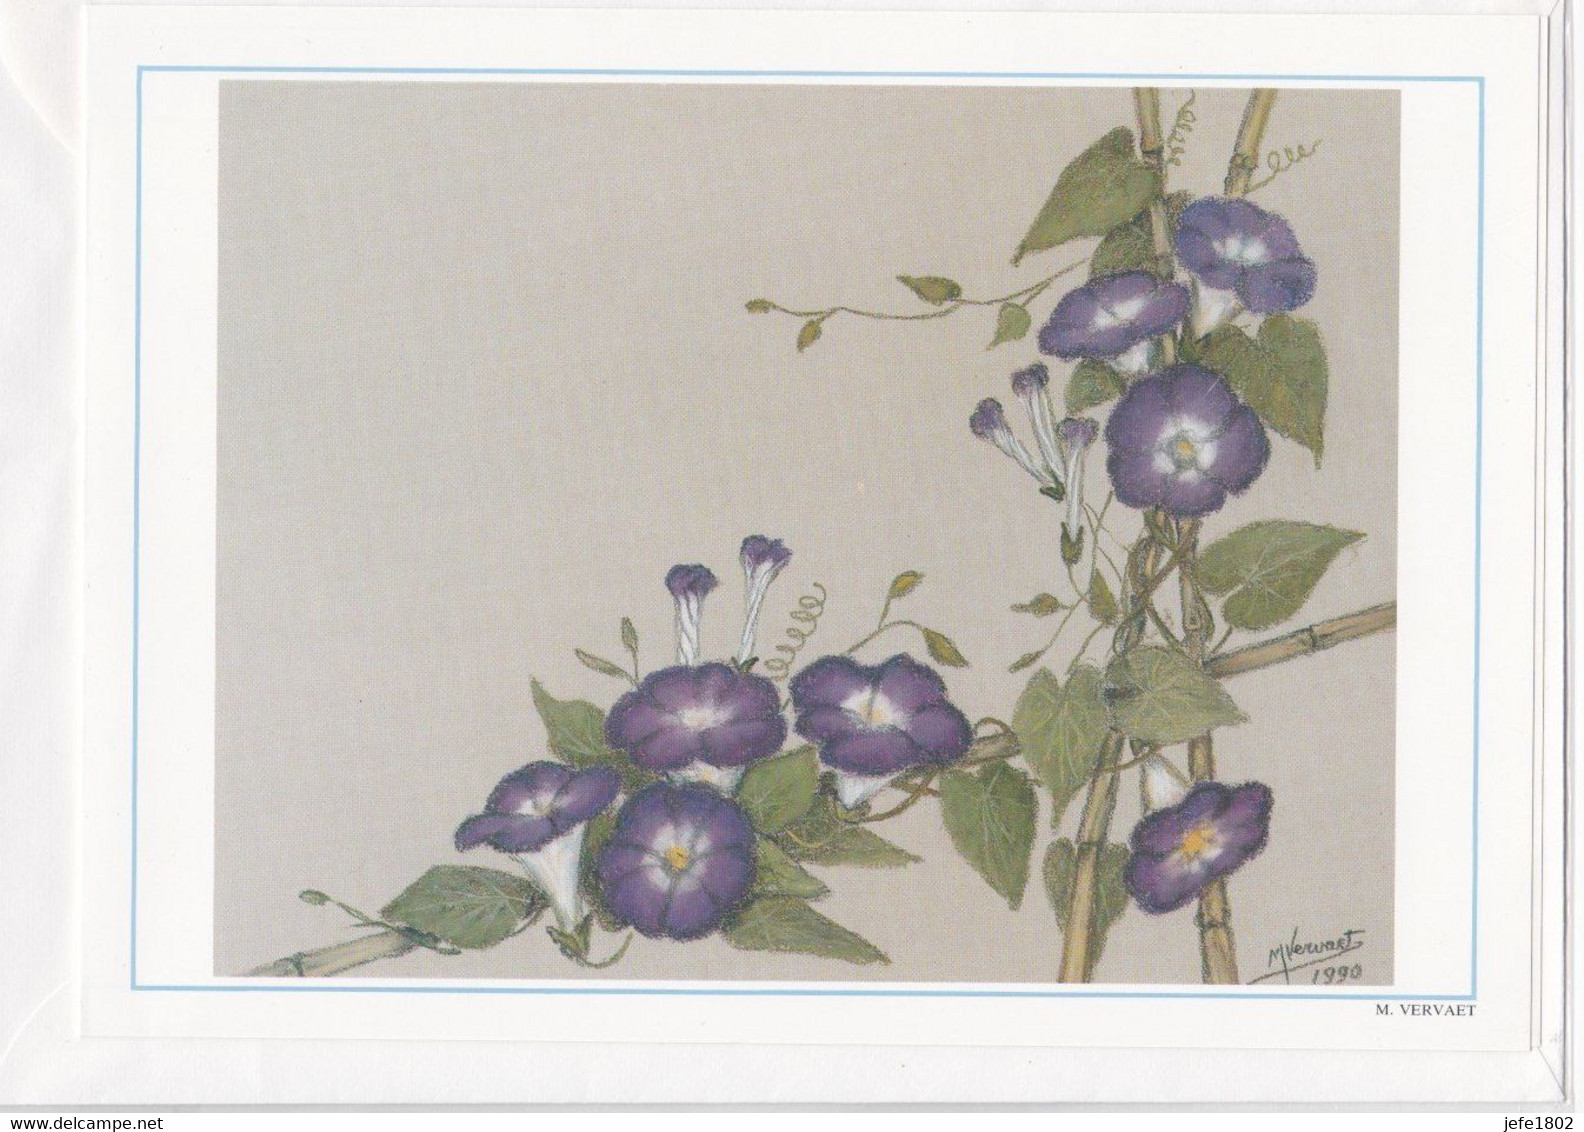 Postogram 053 / 92 - Lila - M. Vervaet - Flowers - Postogram